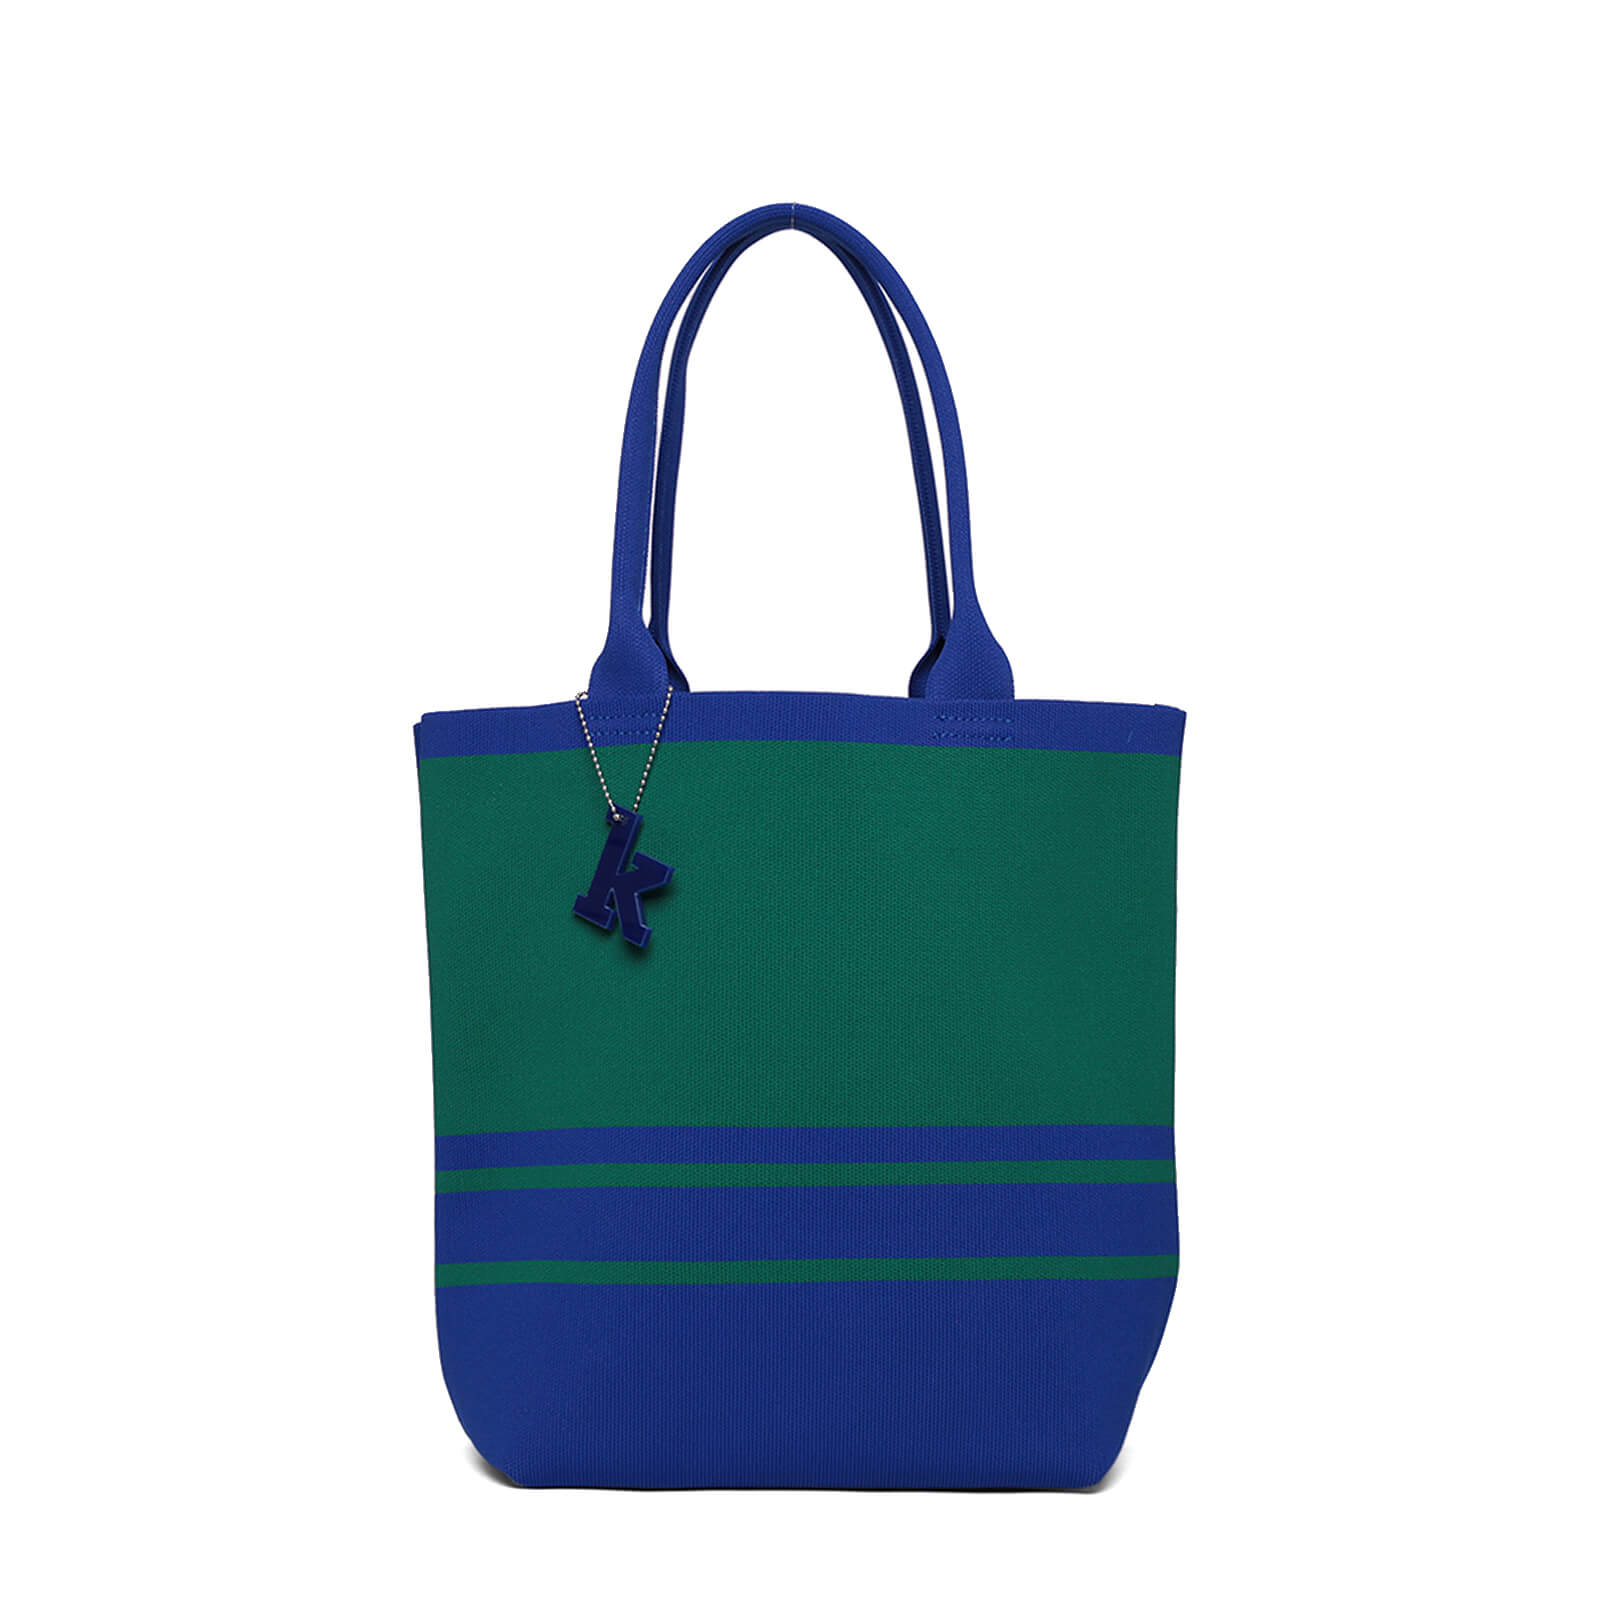 bolsa_shopping_bag_knit_61165_i24_unclek_azul_verde_1